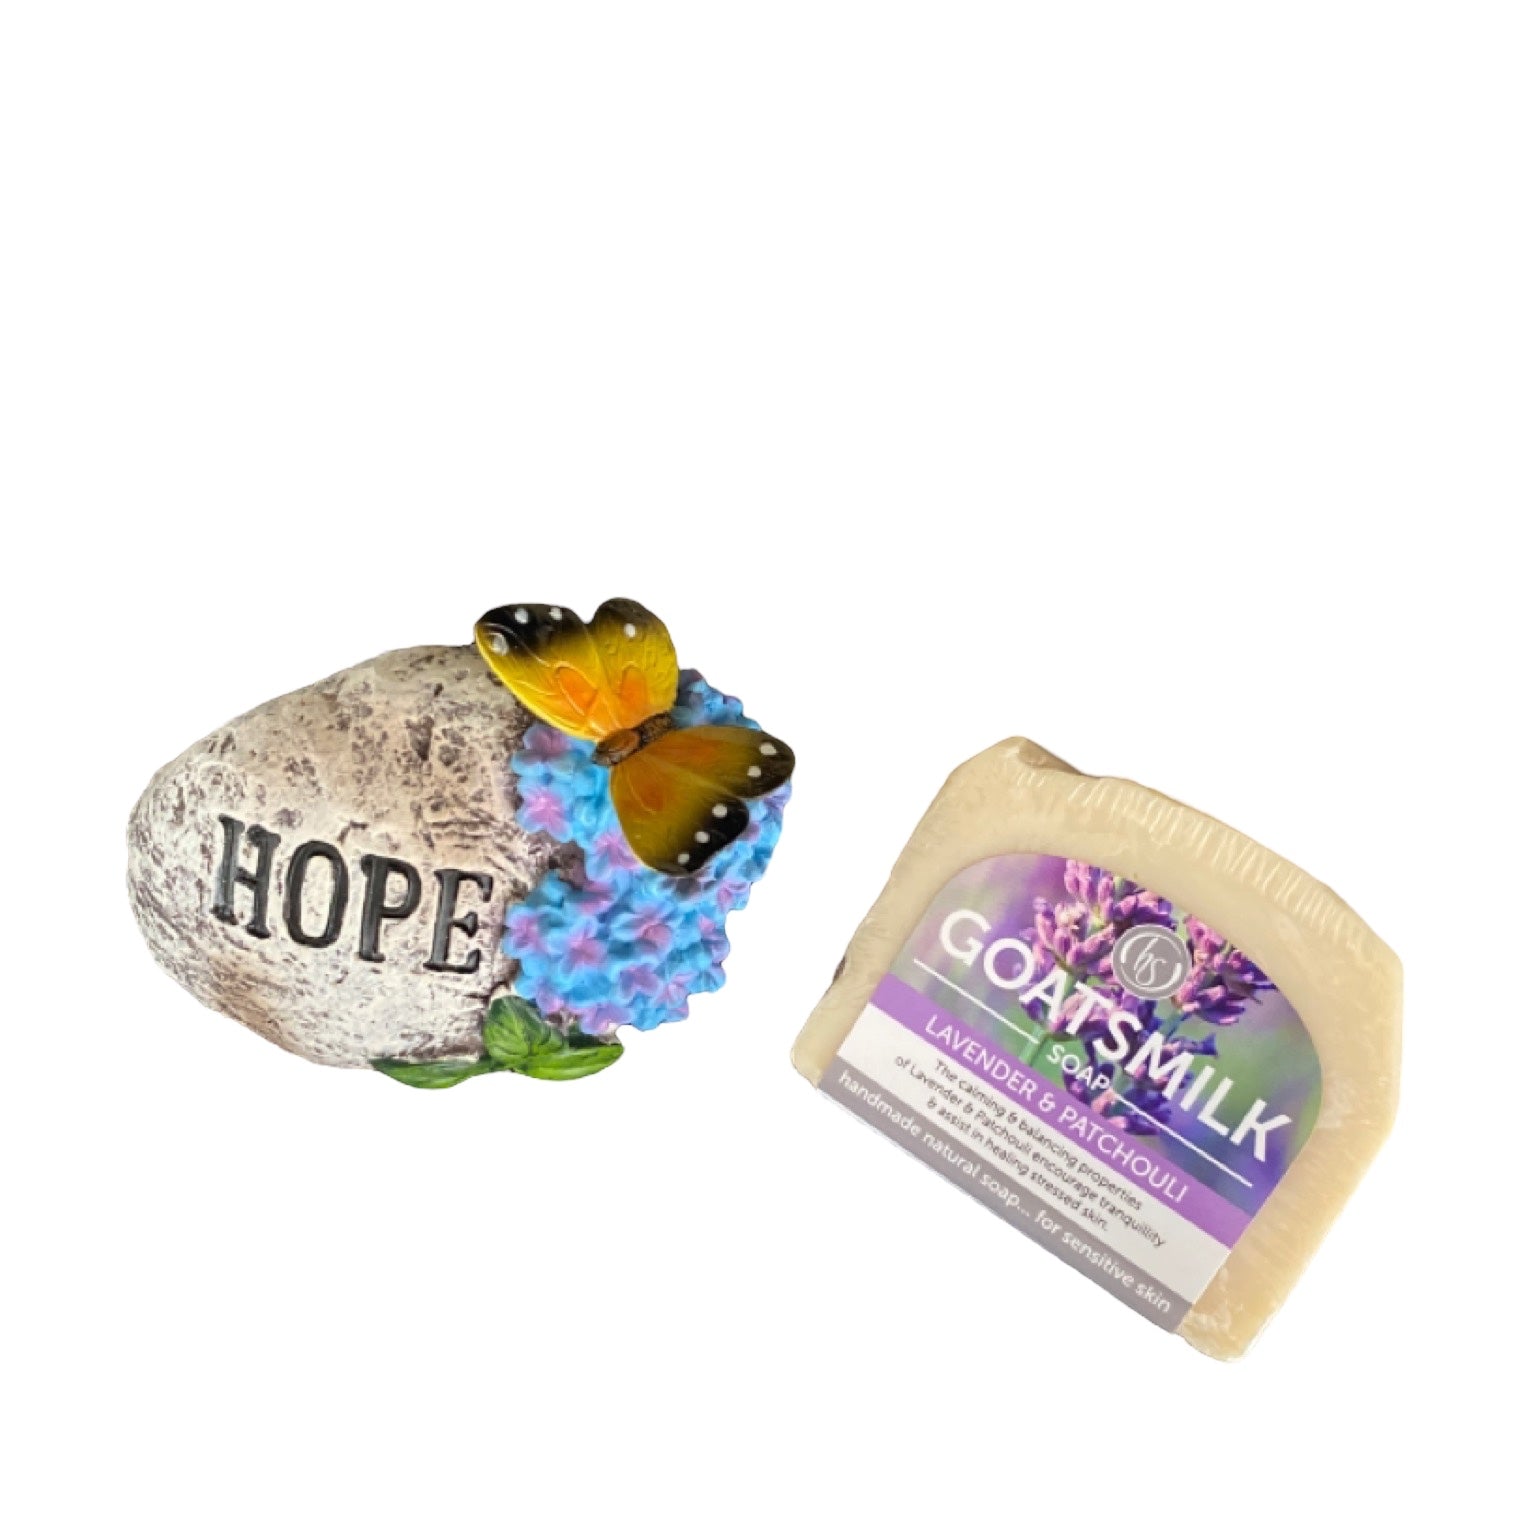 Garden Hope Gardener Stone Goatmilk Soap Gift - The Renmy Store Homewares & Gifts 